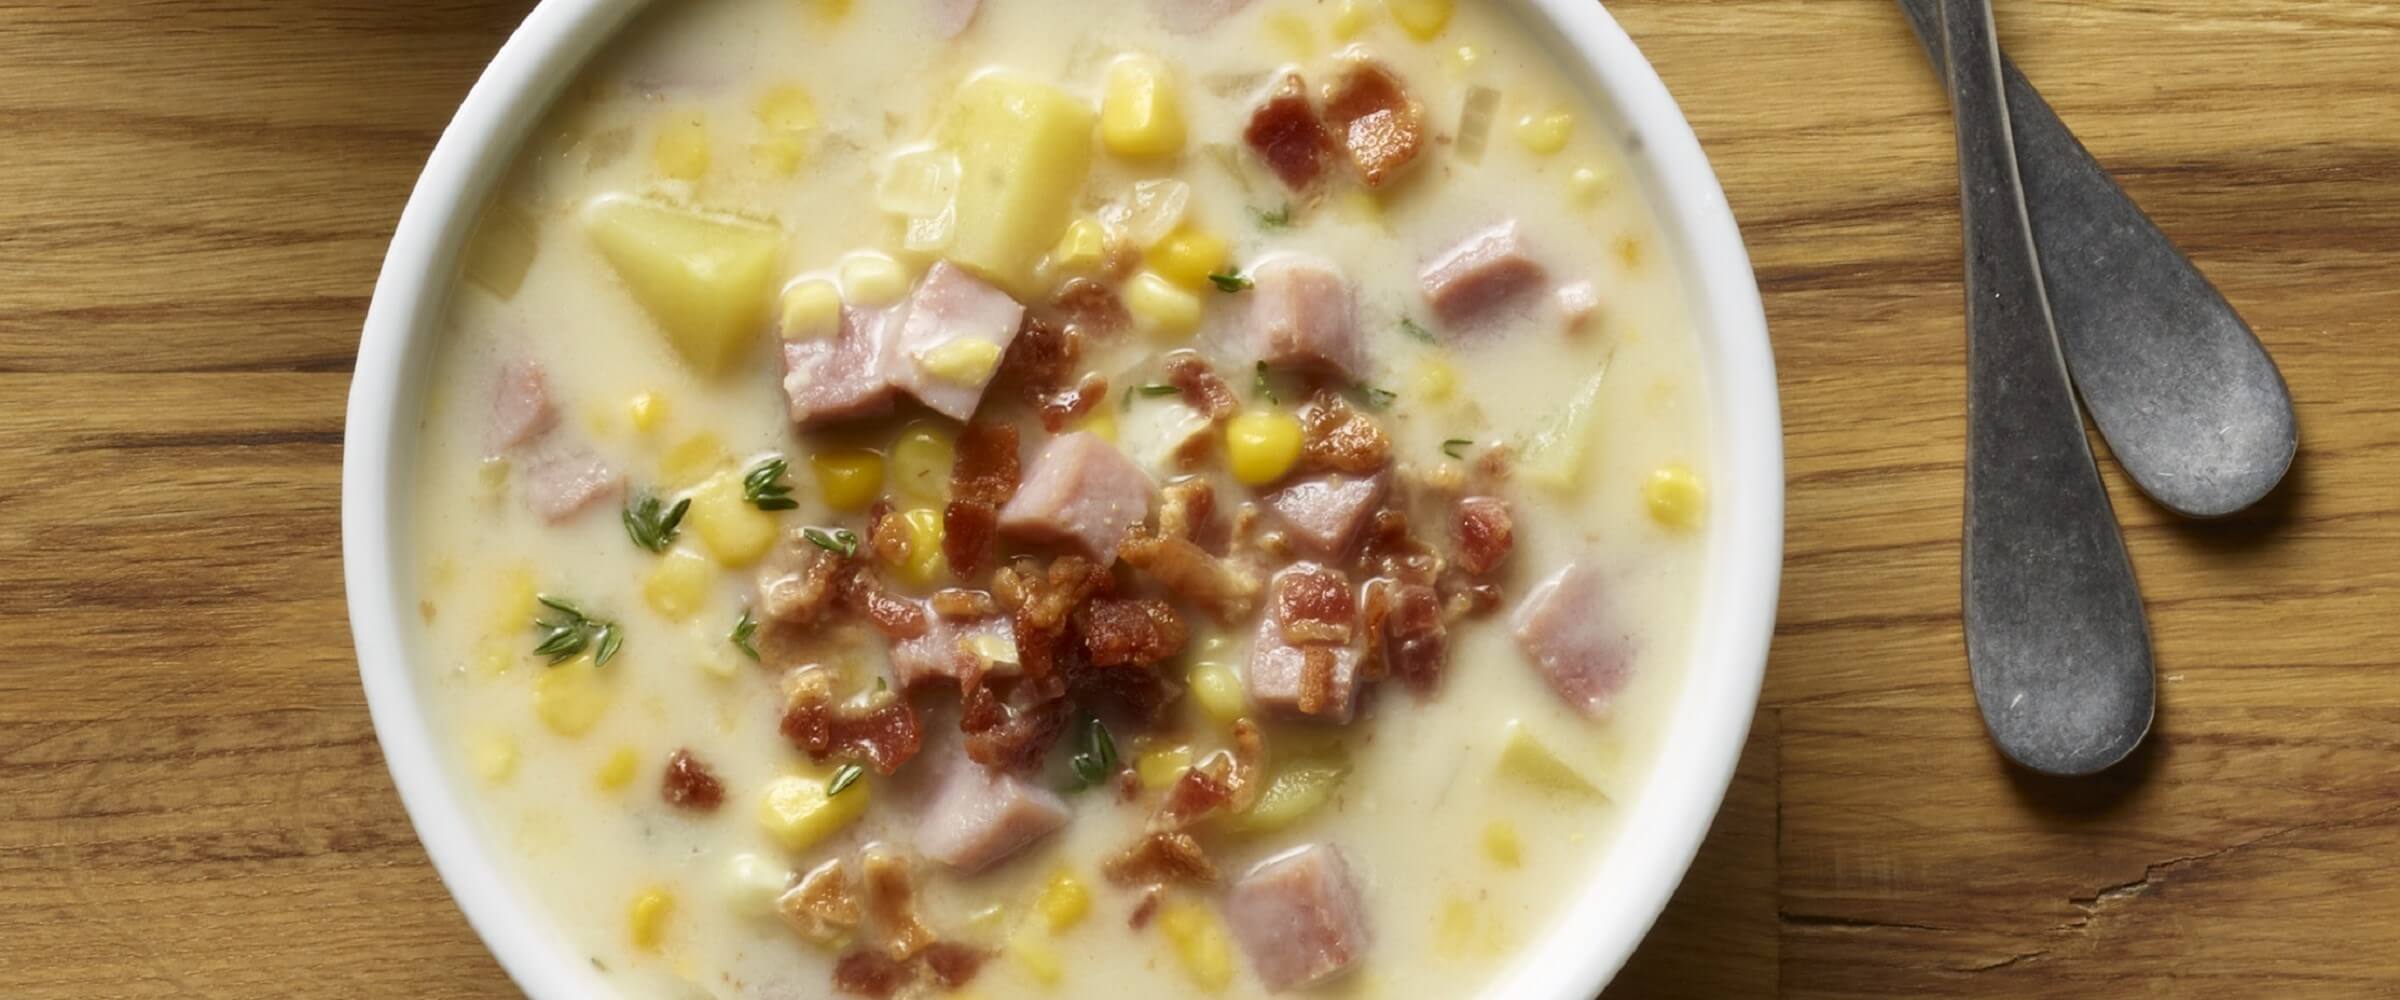 Ham potato corn chowder topped with bacon bits in white bowl